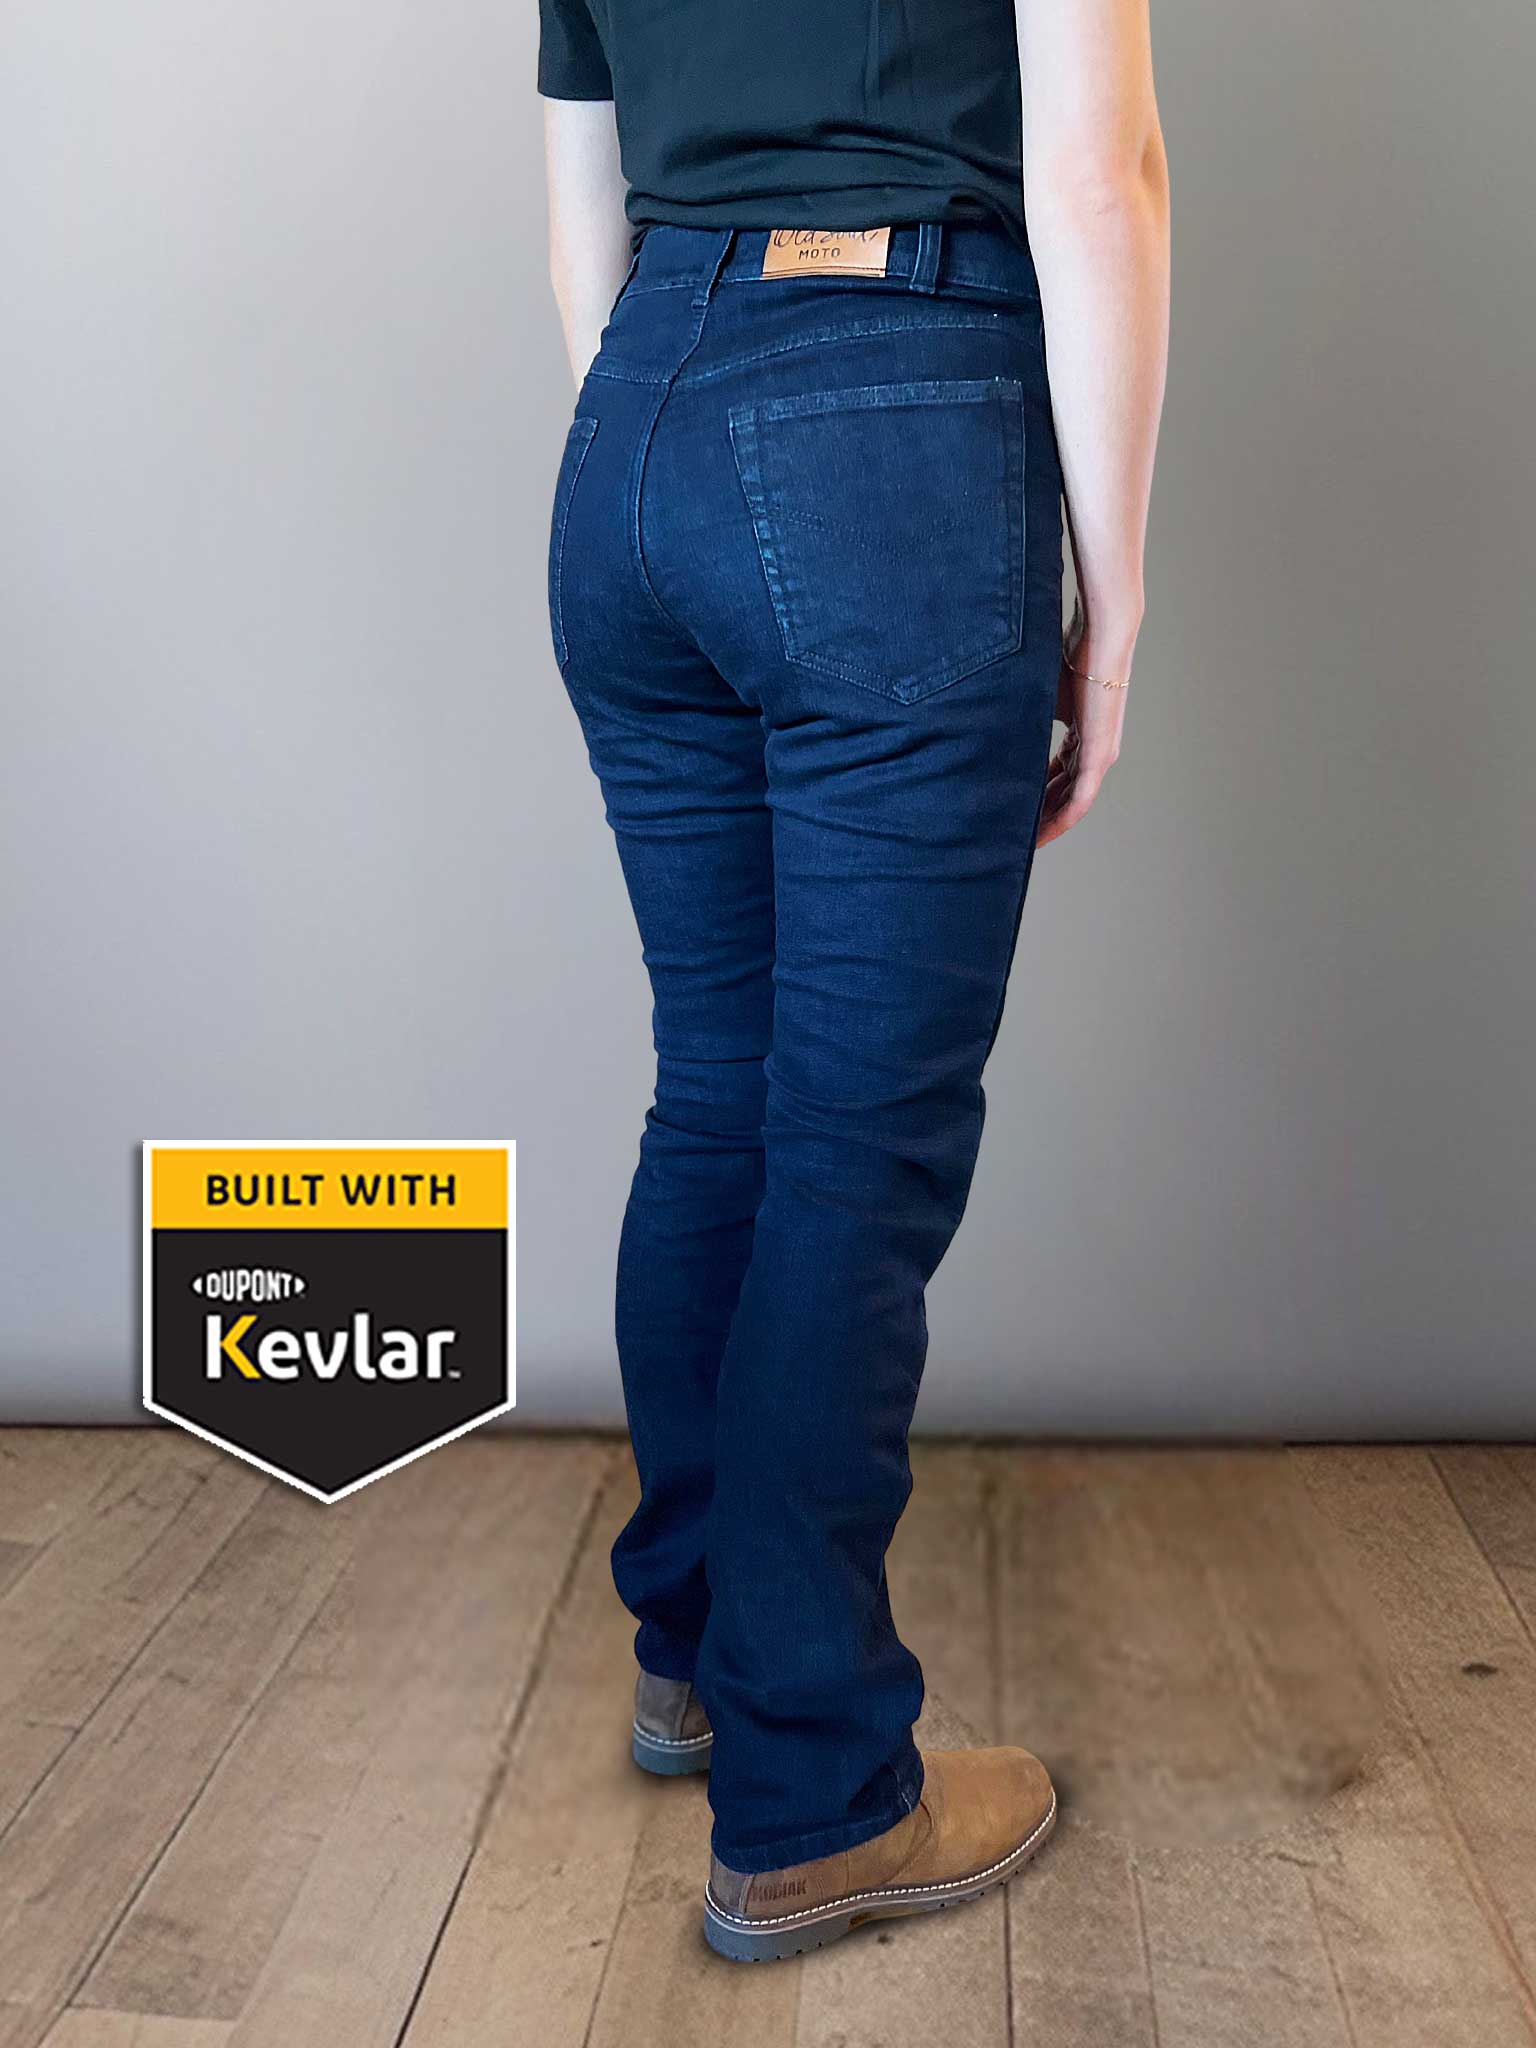 Women's Kevlar motorcycle jeans